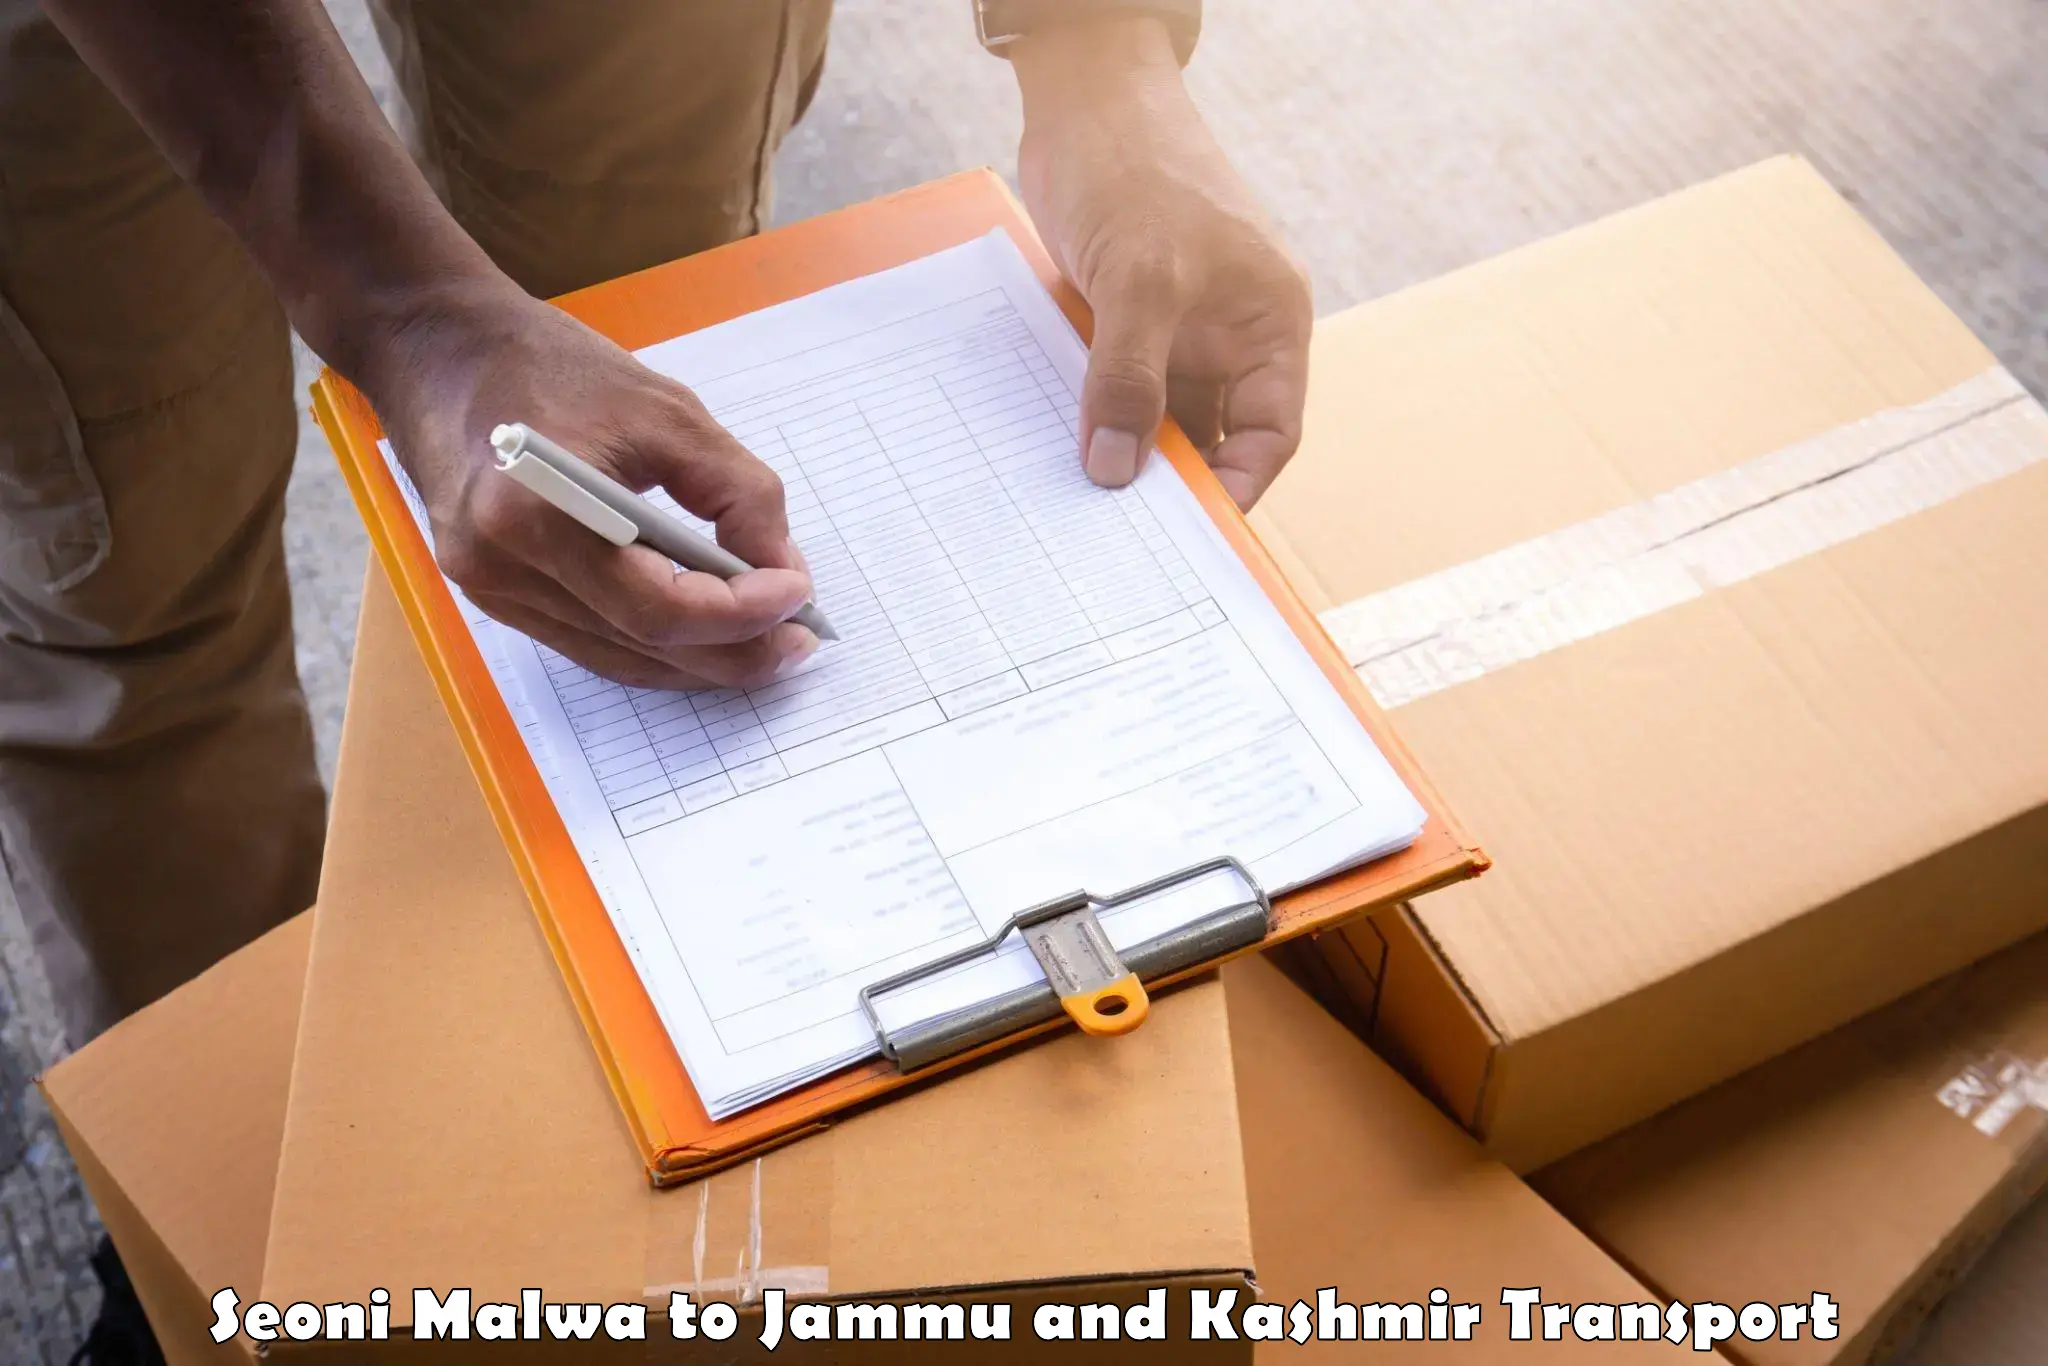 Goods delivery service Seoni Malwa to Baramulla